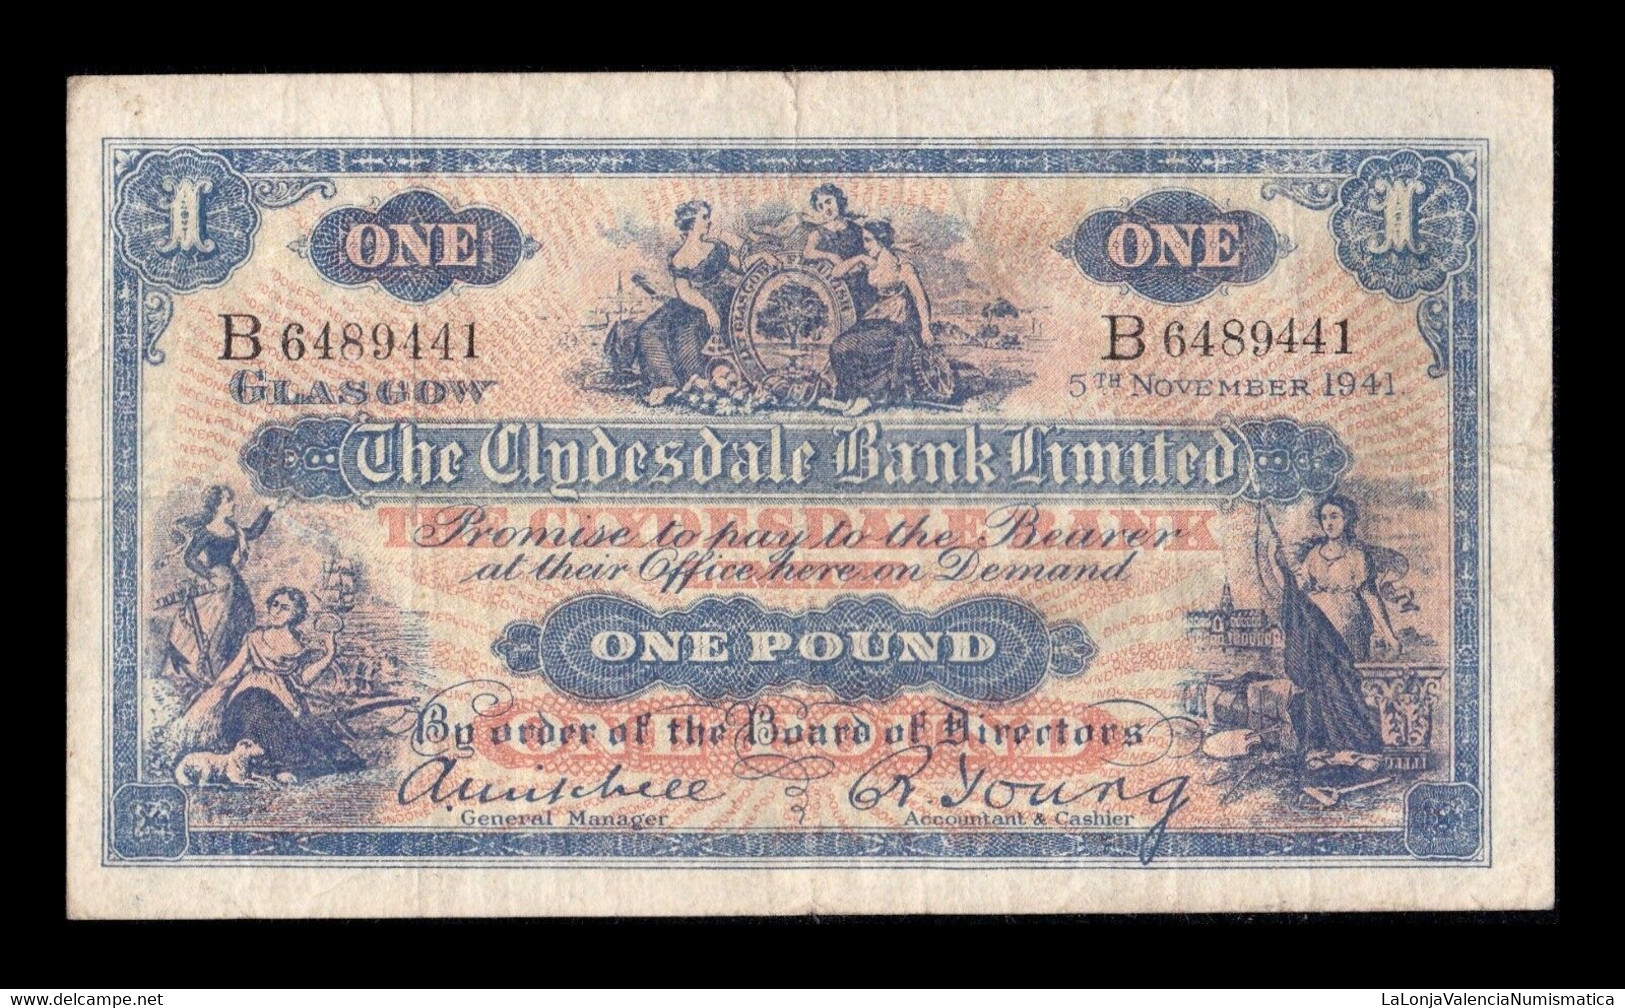 Escocia Scotland 1 Pound Clydesdale Bank Limited 1941 Pick 189b BC+ F+ - 1 Pond